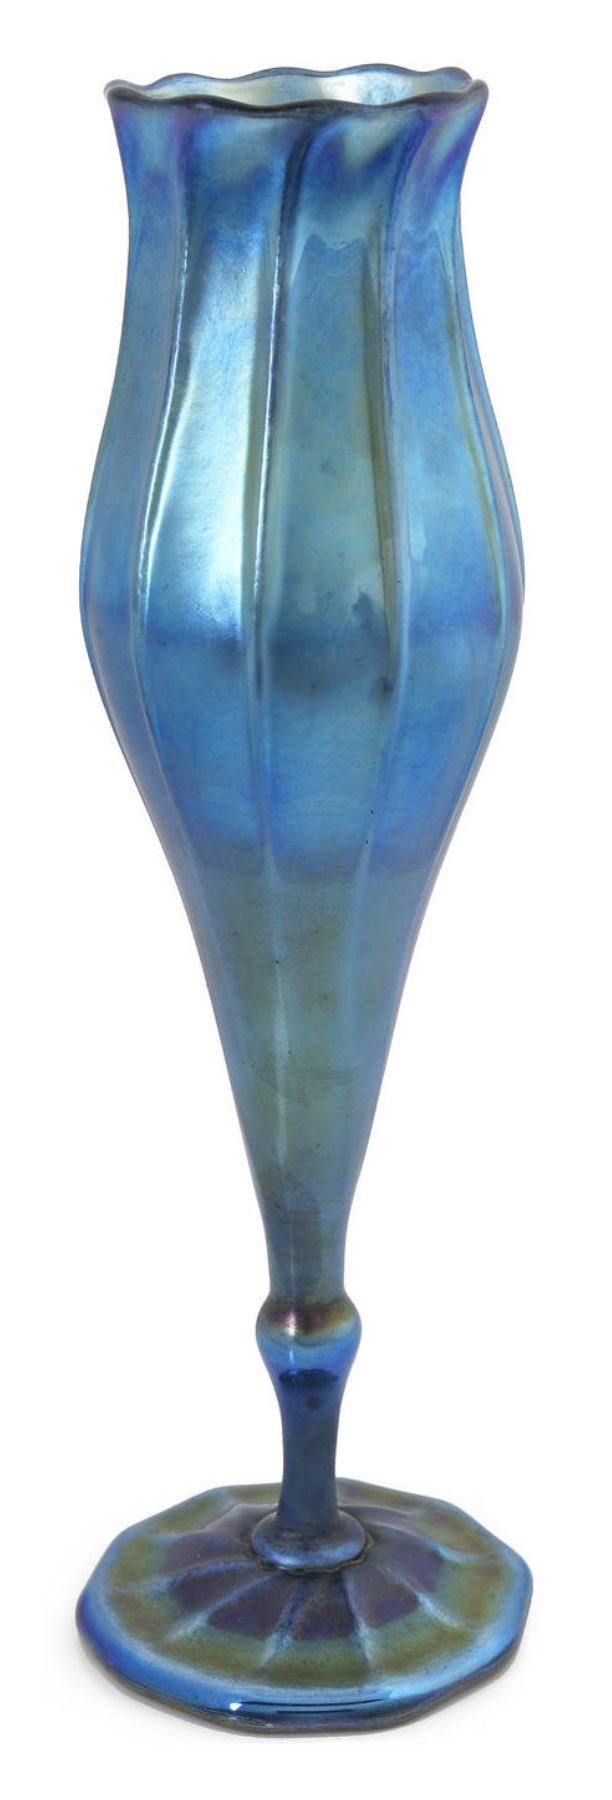 A Tiffany Studios blue Favrile glass floriform vase  circa 1919  signed 1525 969...